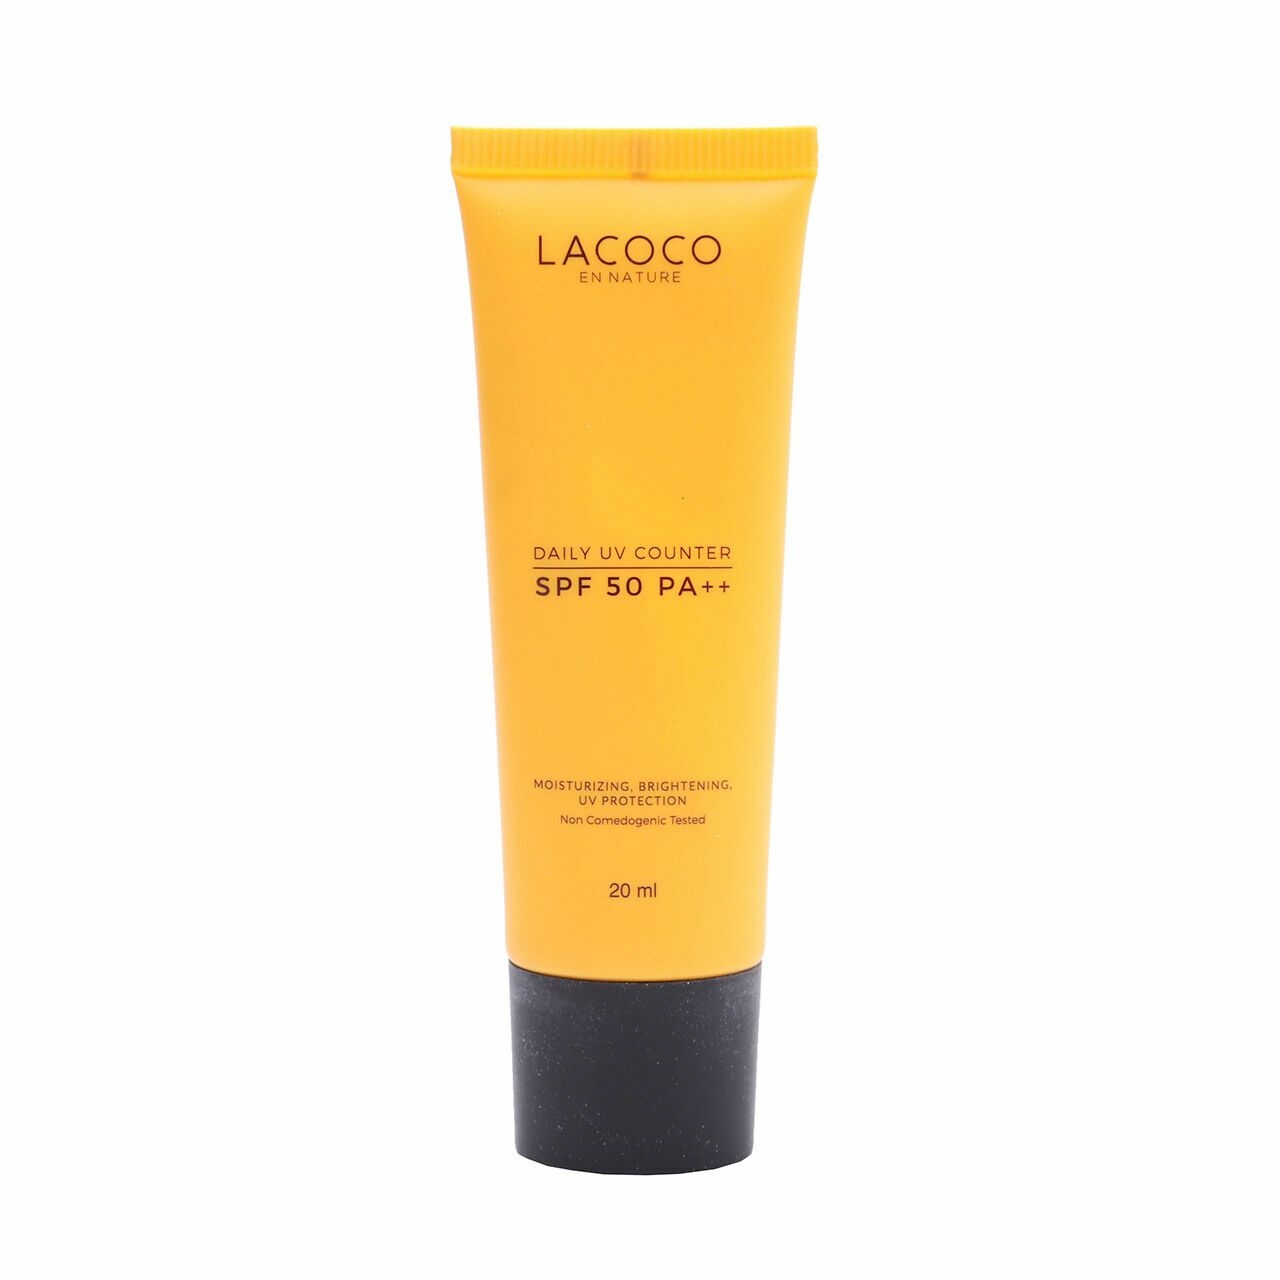 Lacoco en nature Daily Uv Counter SPF 50 PA++ Skin Care